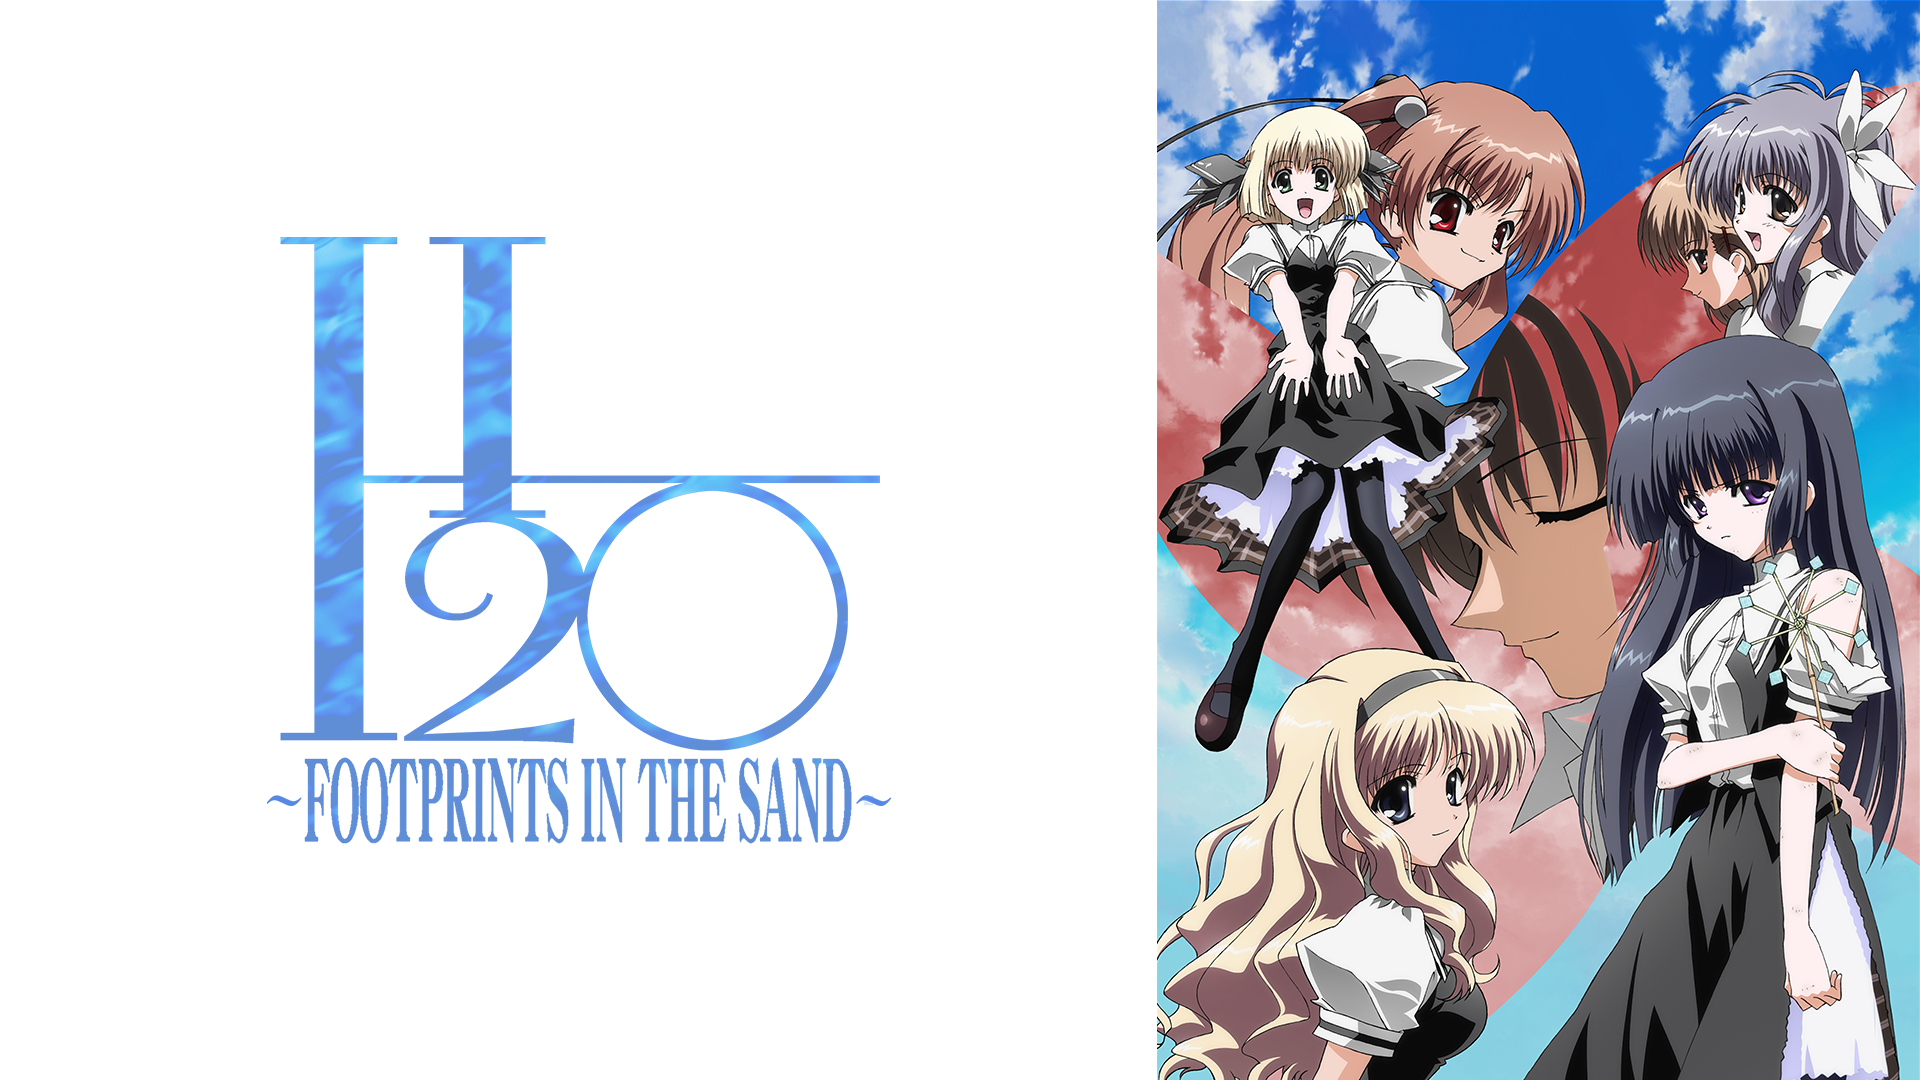 H2o Footprints In The Sand アニメ 07 の動画視聴 U Next 31日間無料トライアル